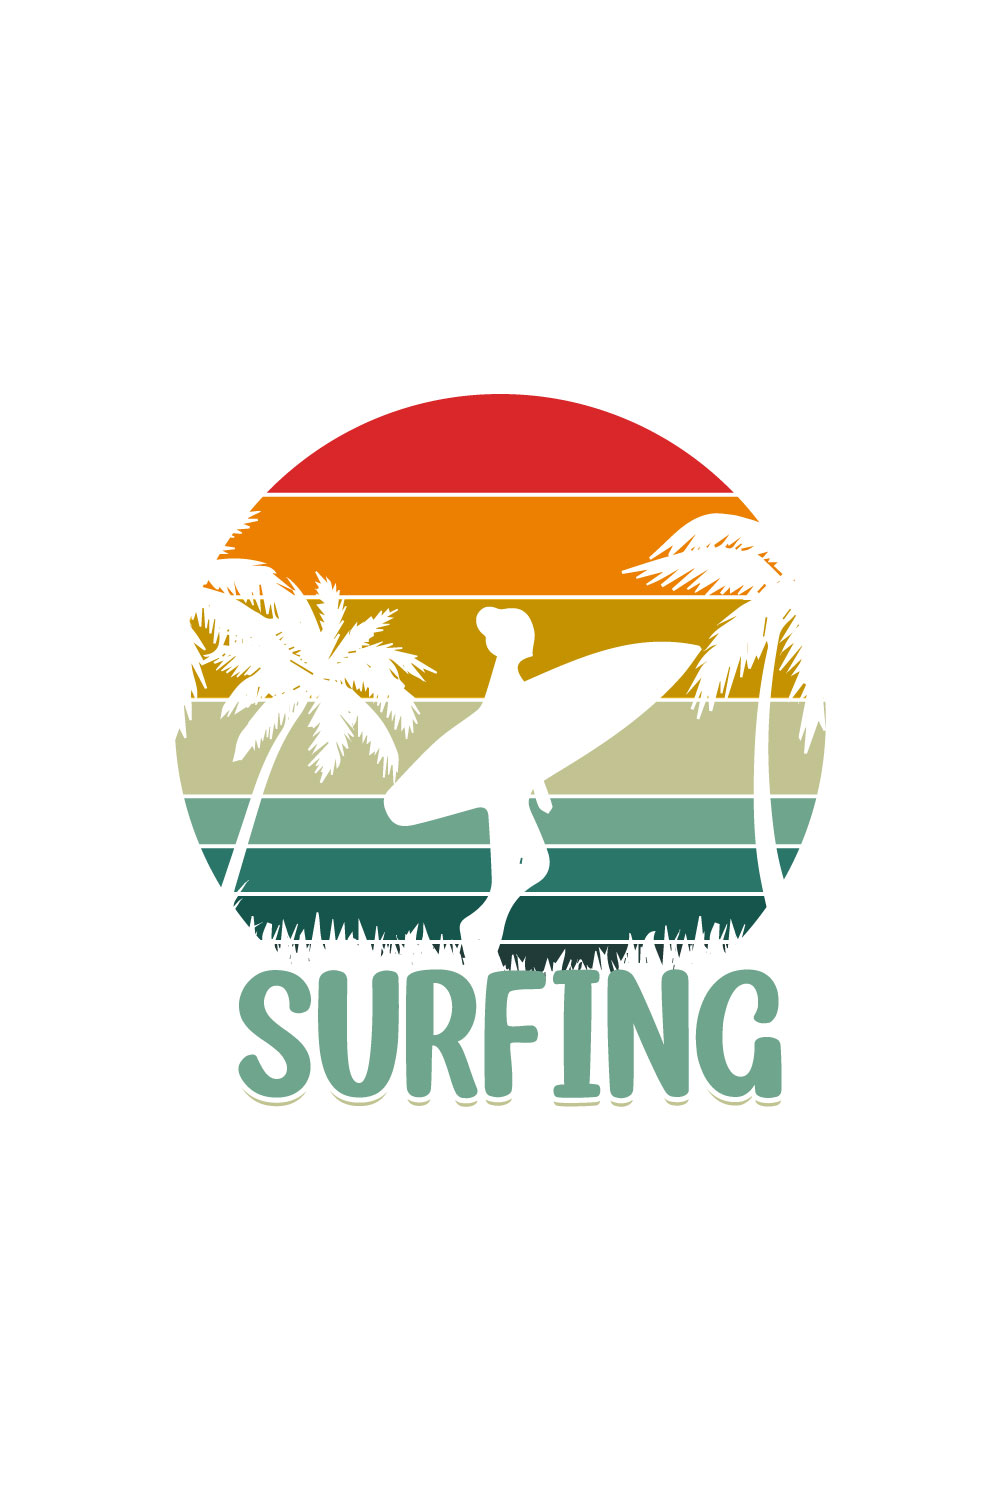 Free Surfing women logo pinterest preview image.